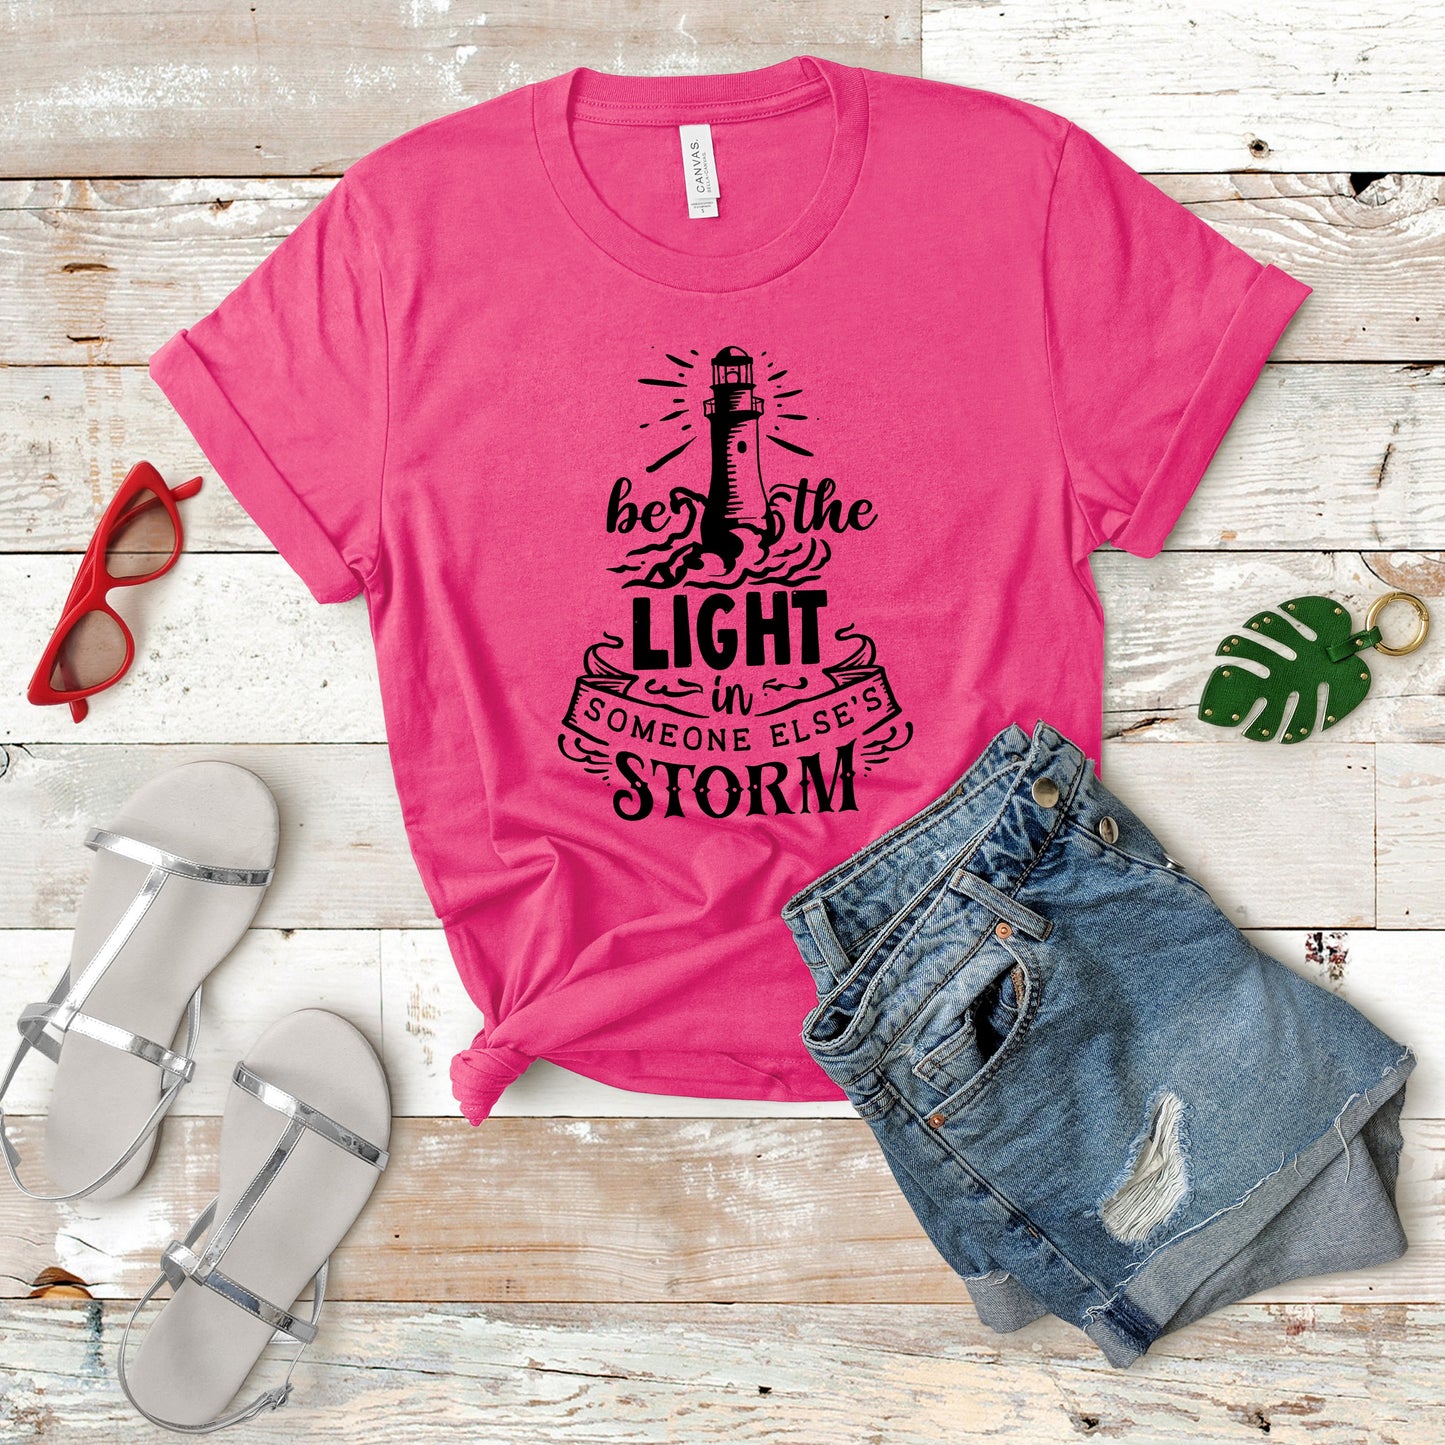 Fantastic, custom "Be the light" T-shirts